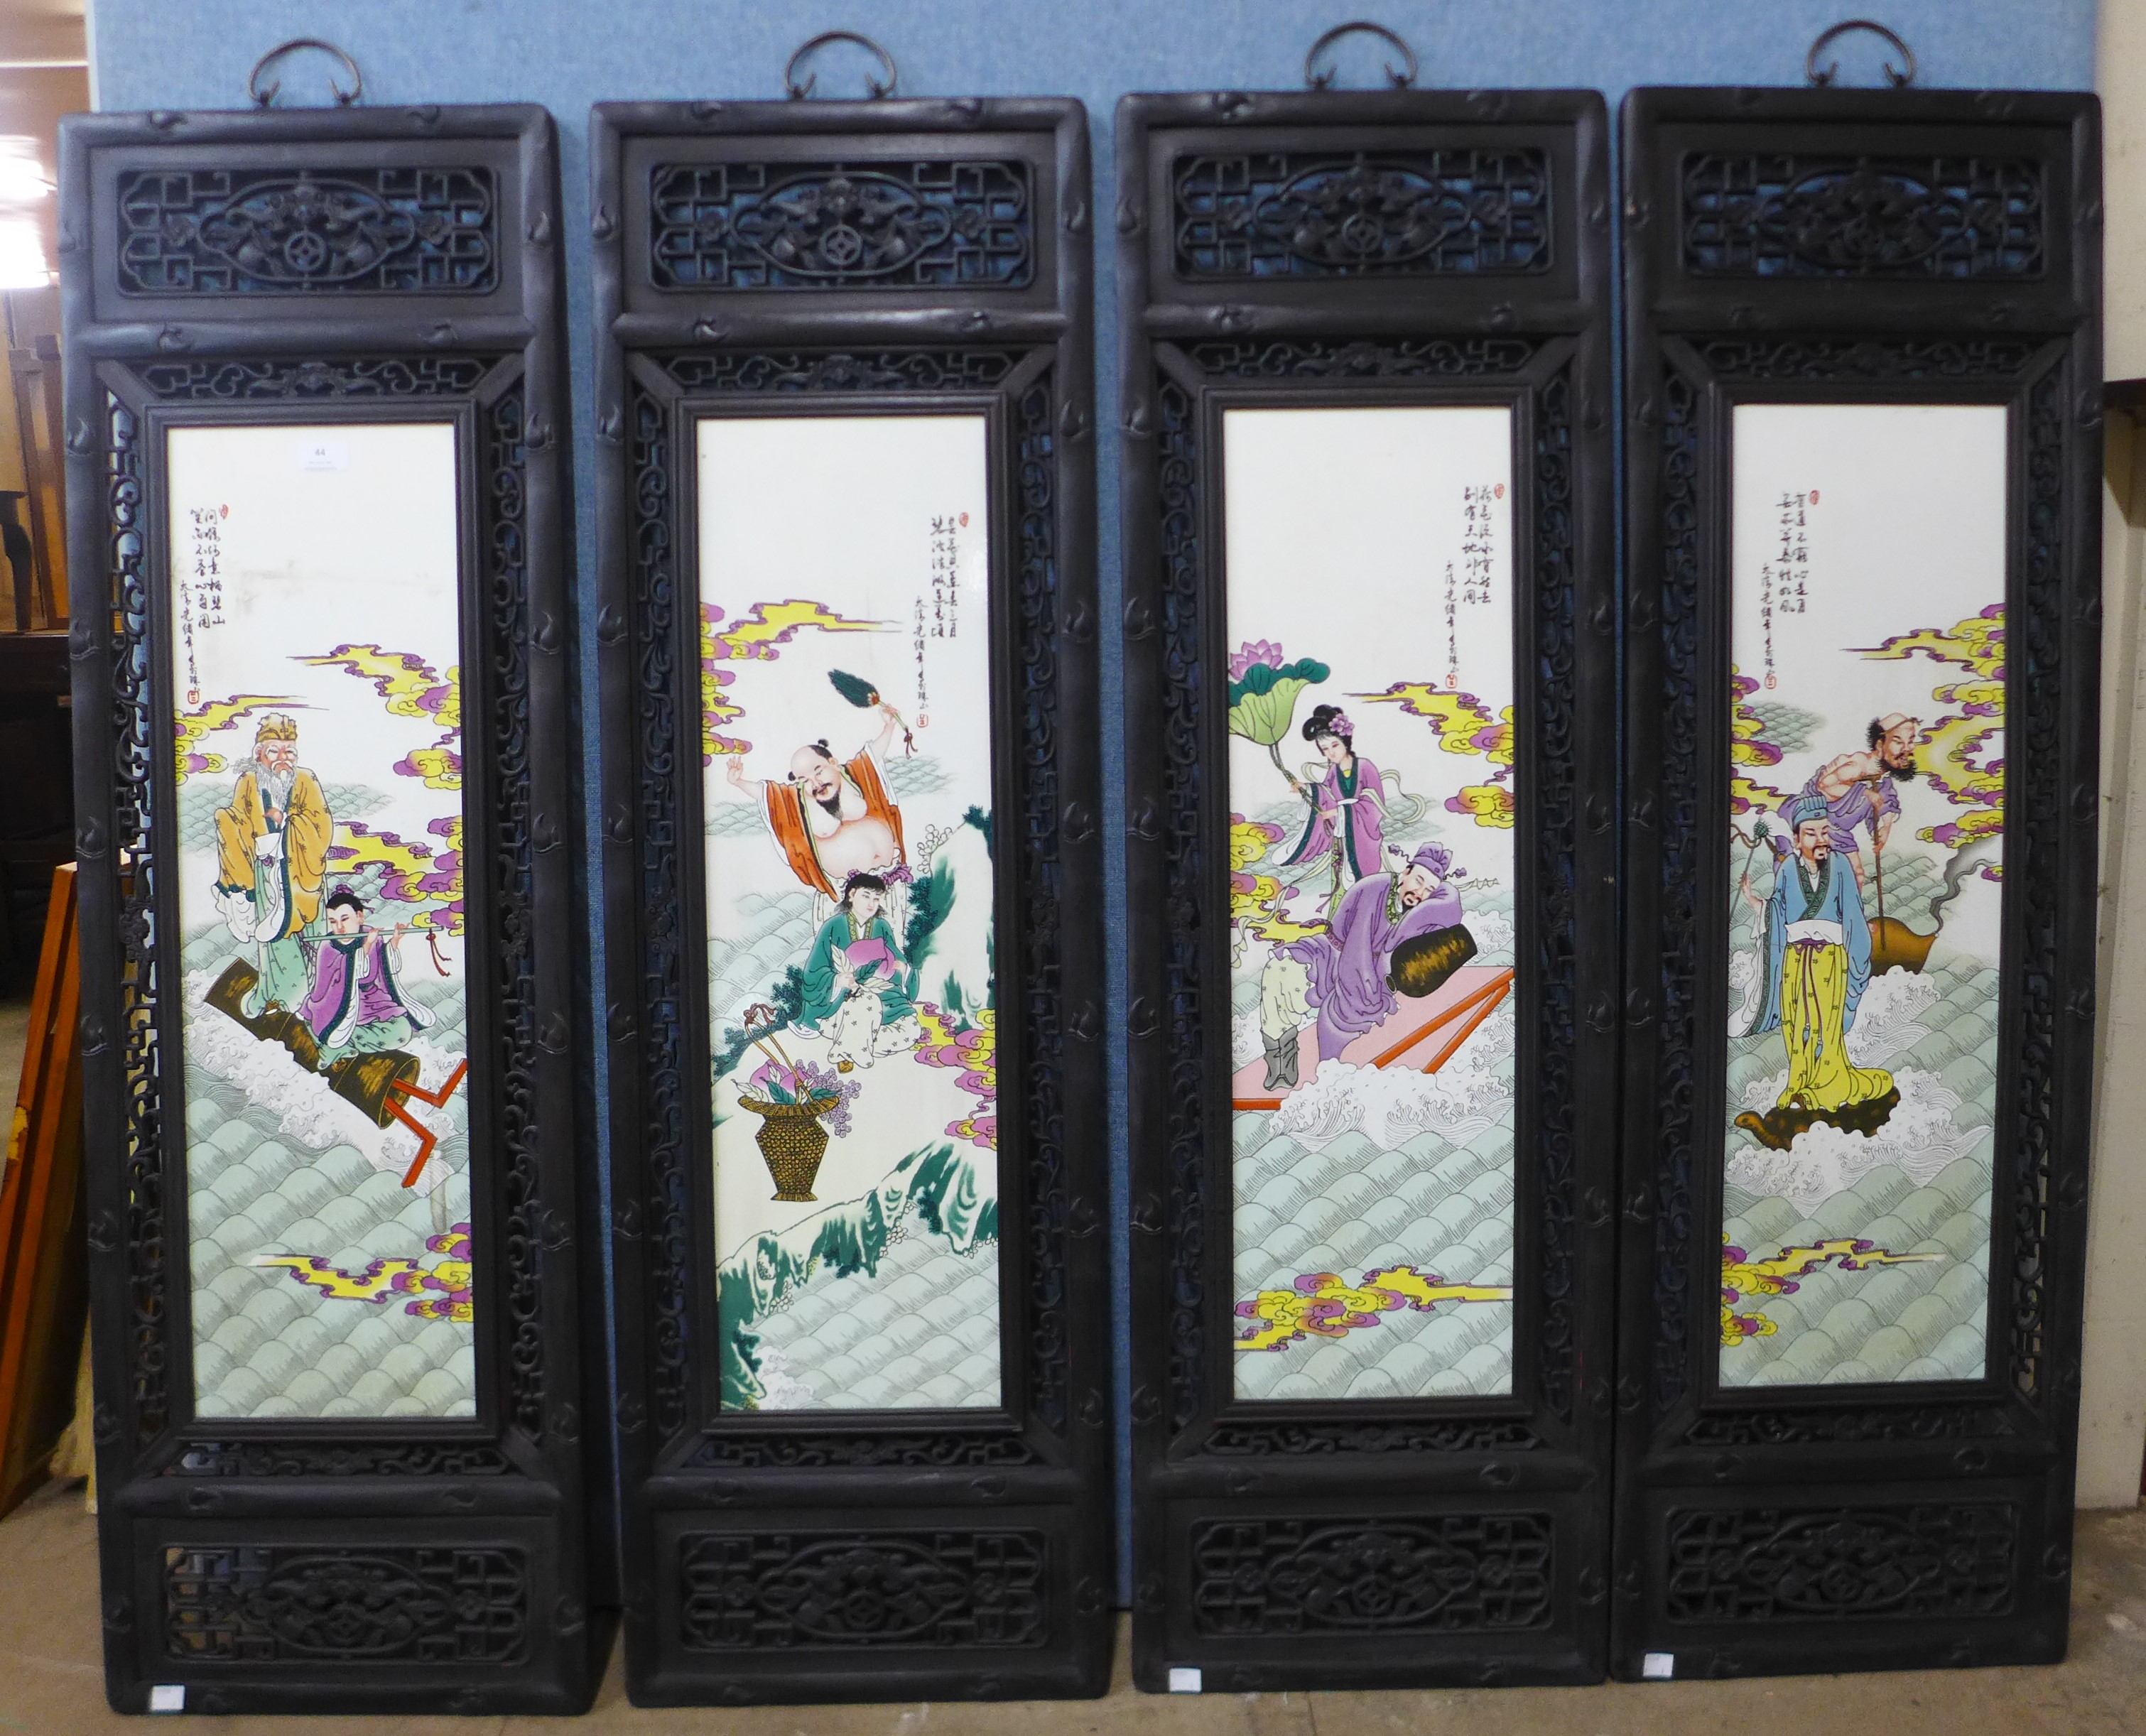 A set of four Chinese porcelain tiles, framed